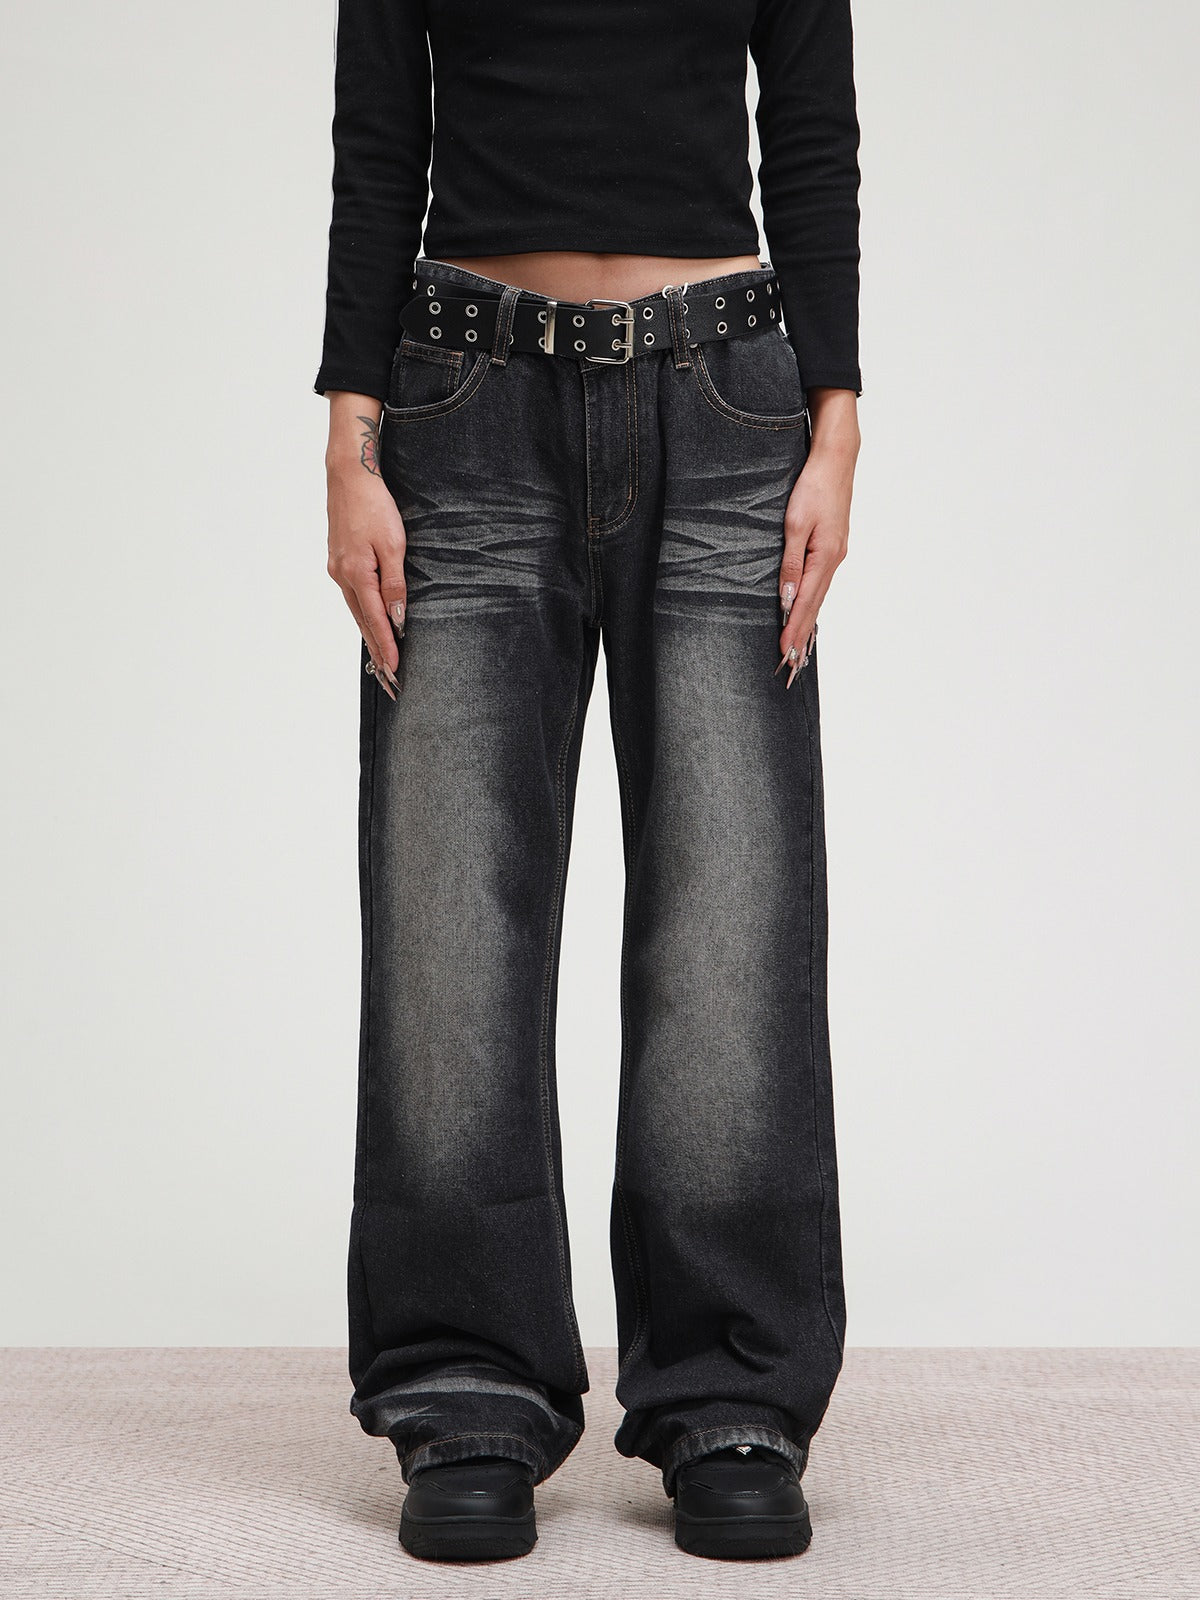 American vibe style high street wash black jeans pants